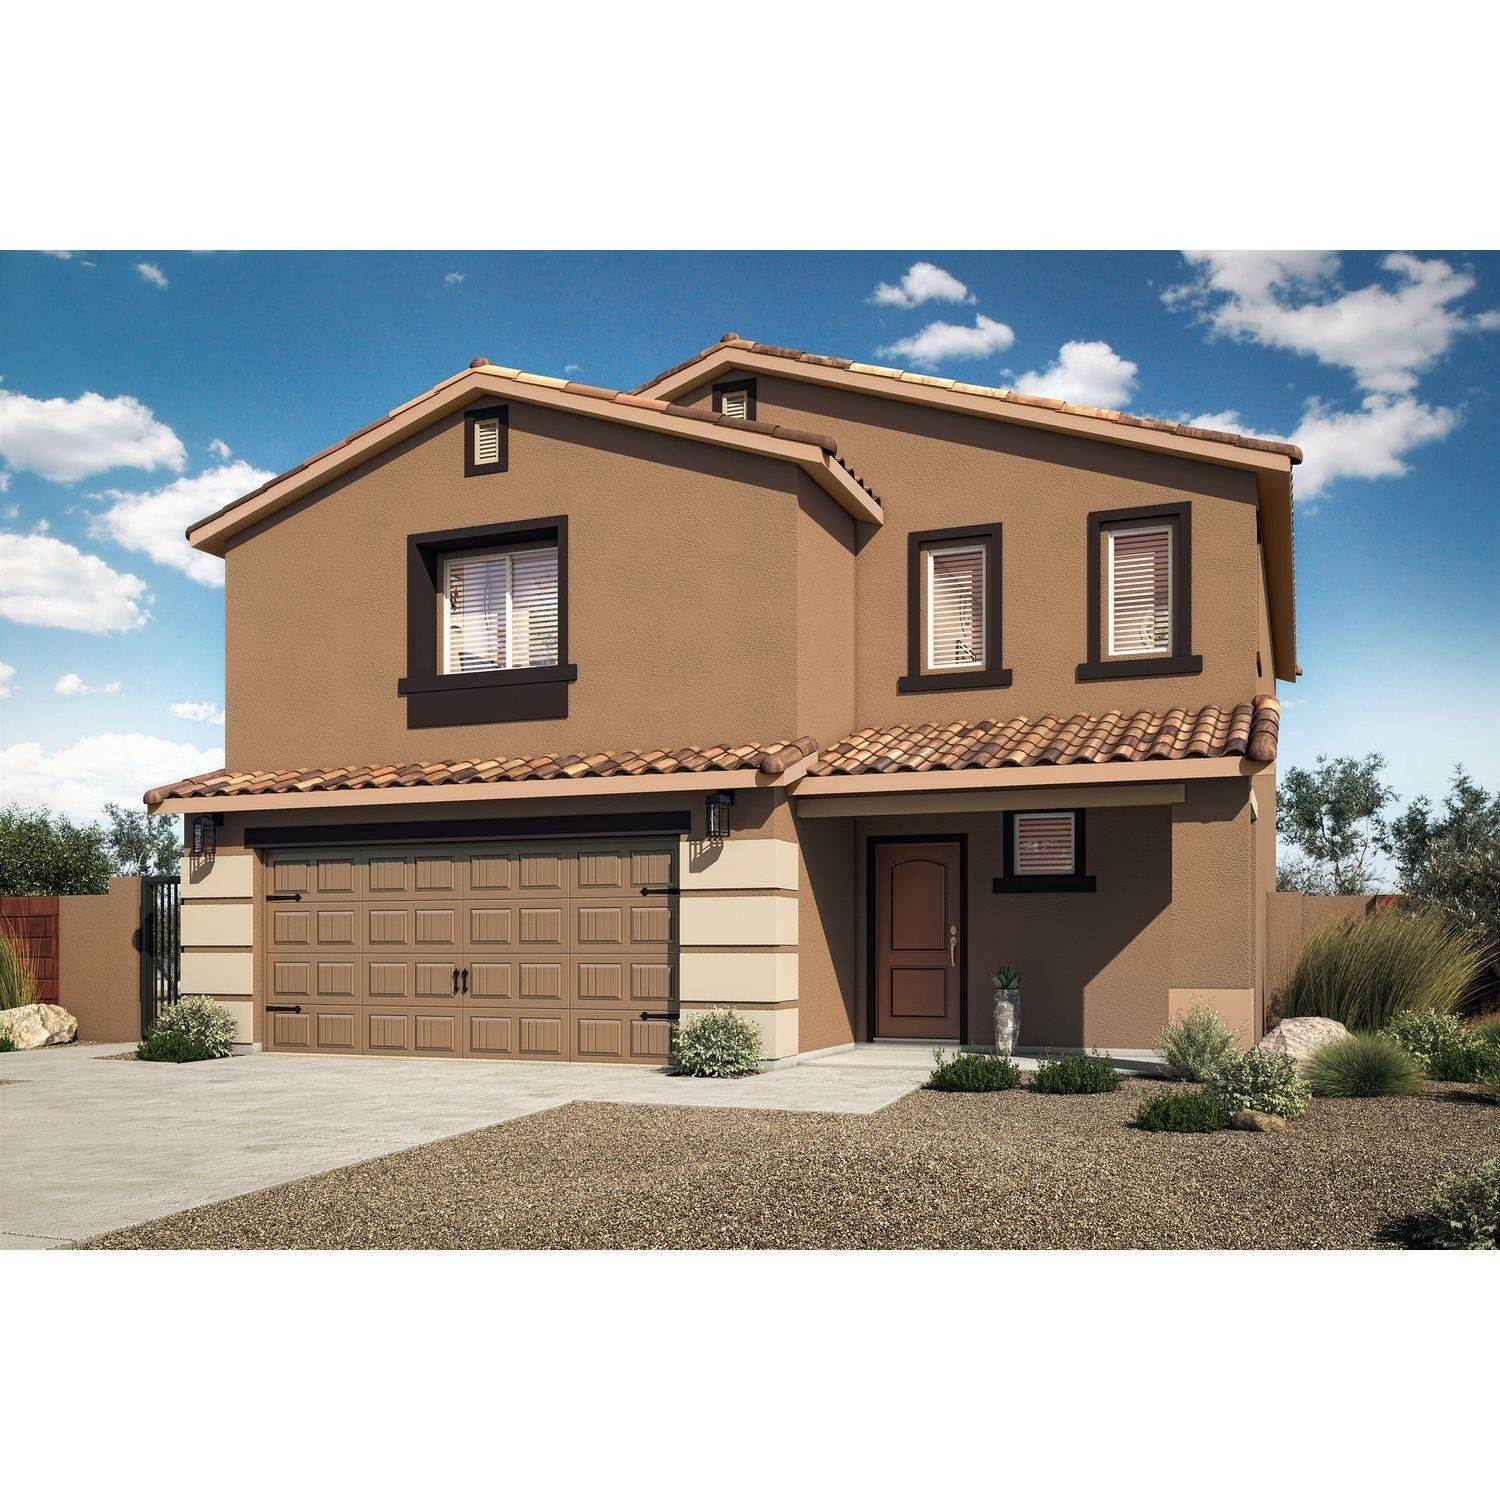 5. Sunrise Estates building at 263 S Ash St, Florence, AZ 85132